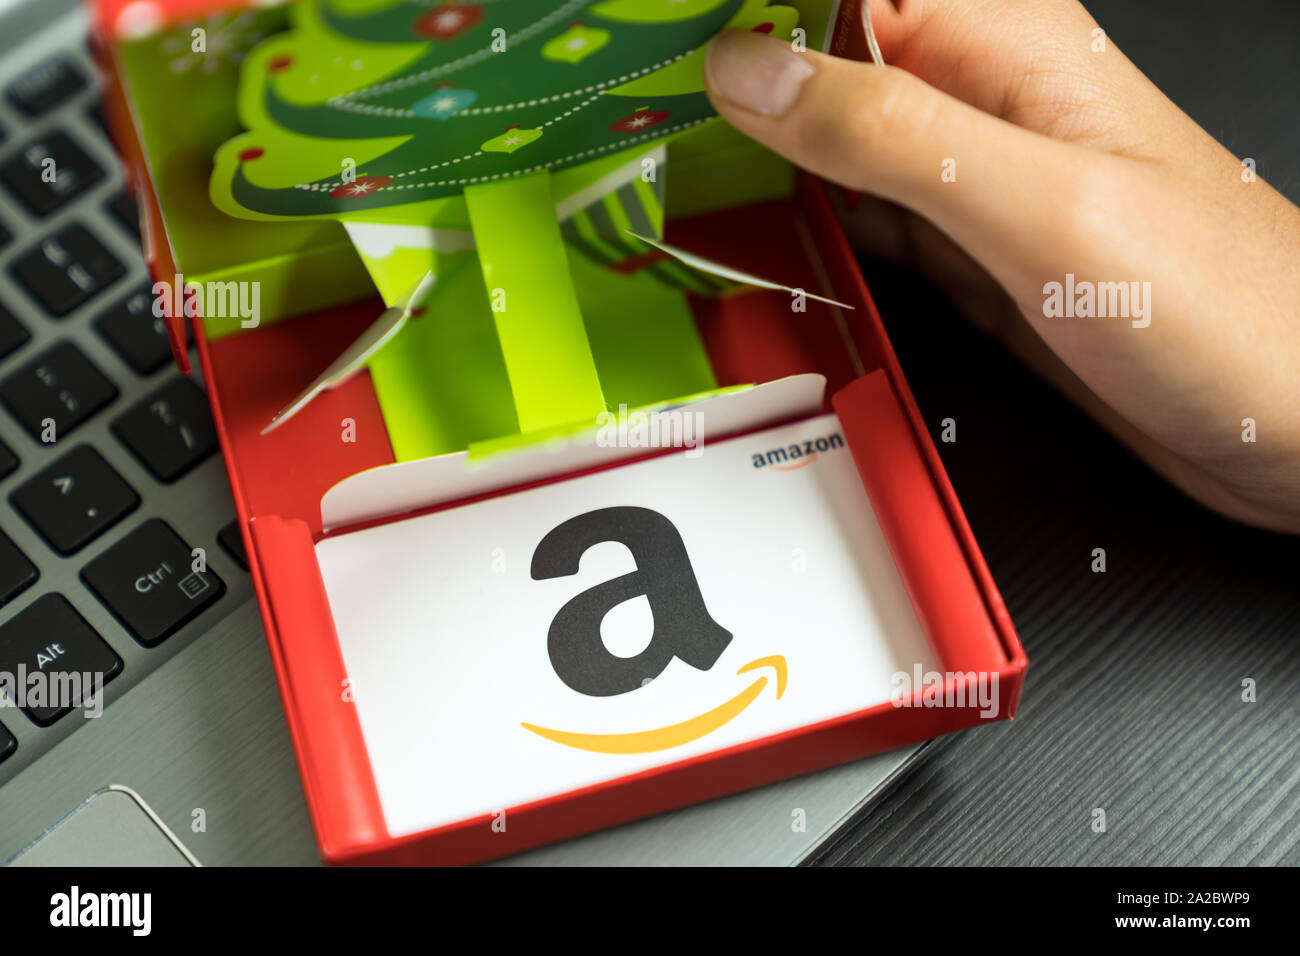 Amazon gift card as a Christmas present Stock Photo - Alamy